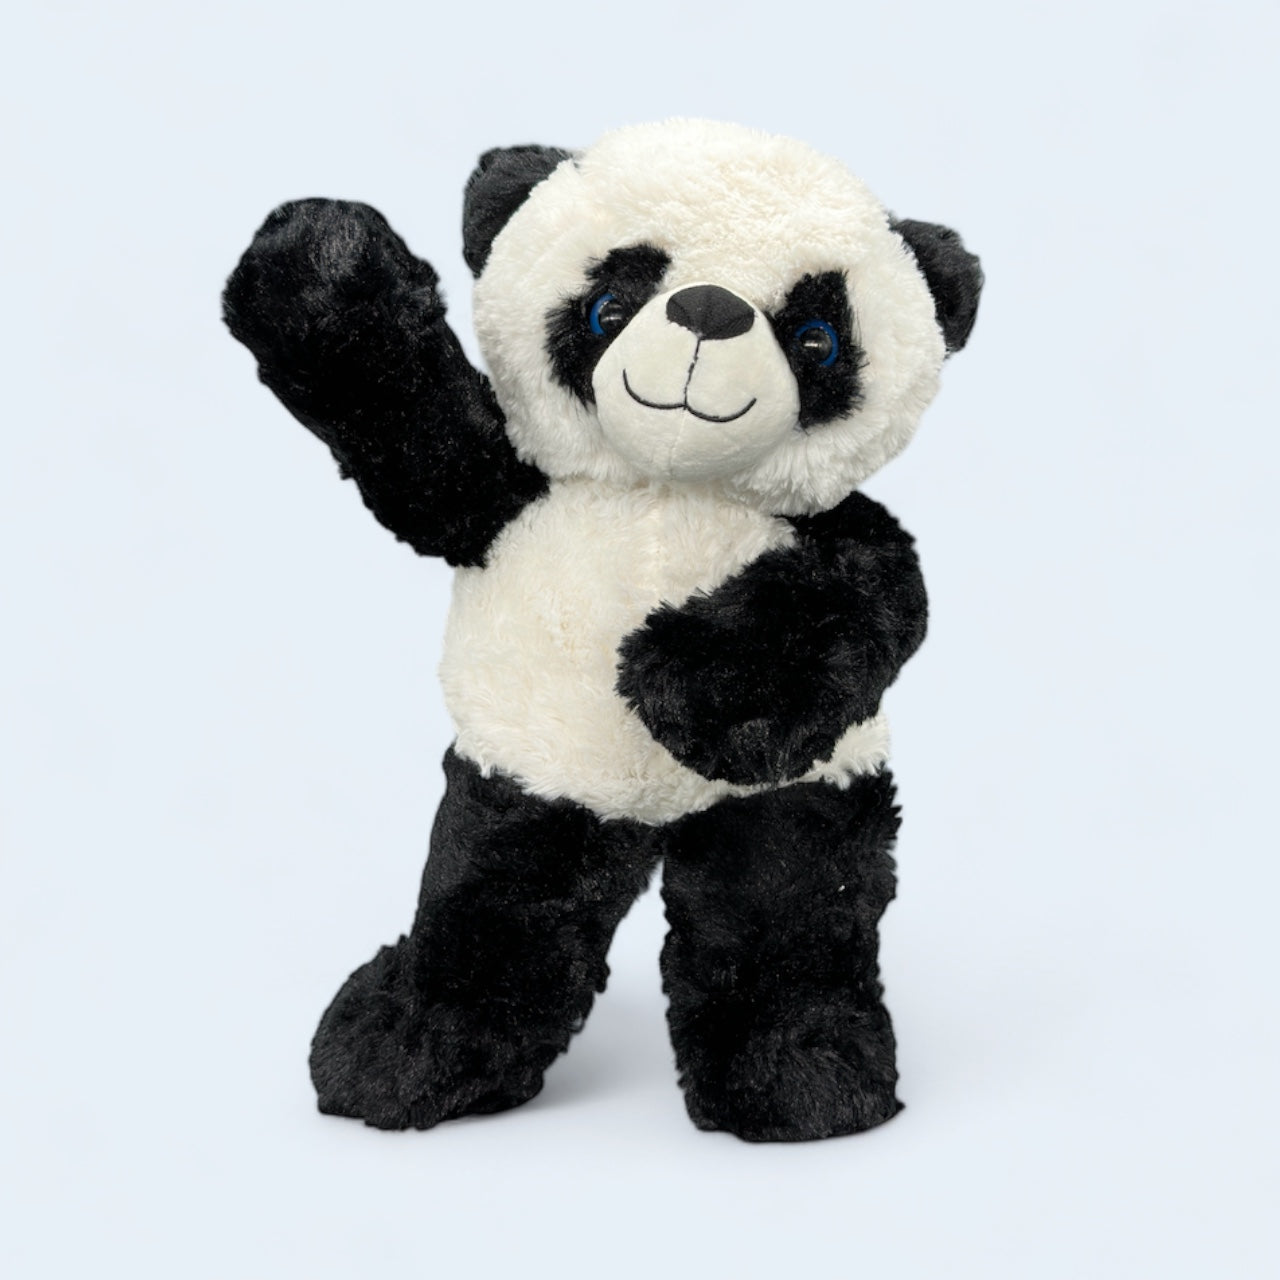 Bamboo the Panda